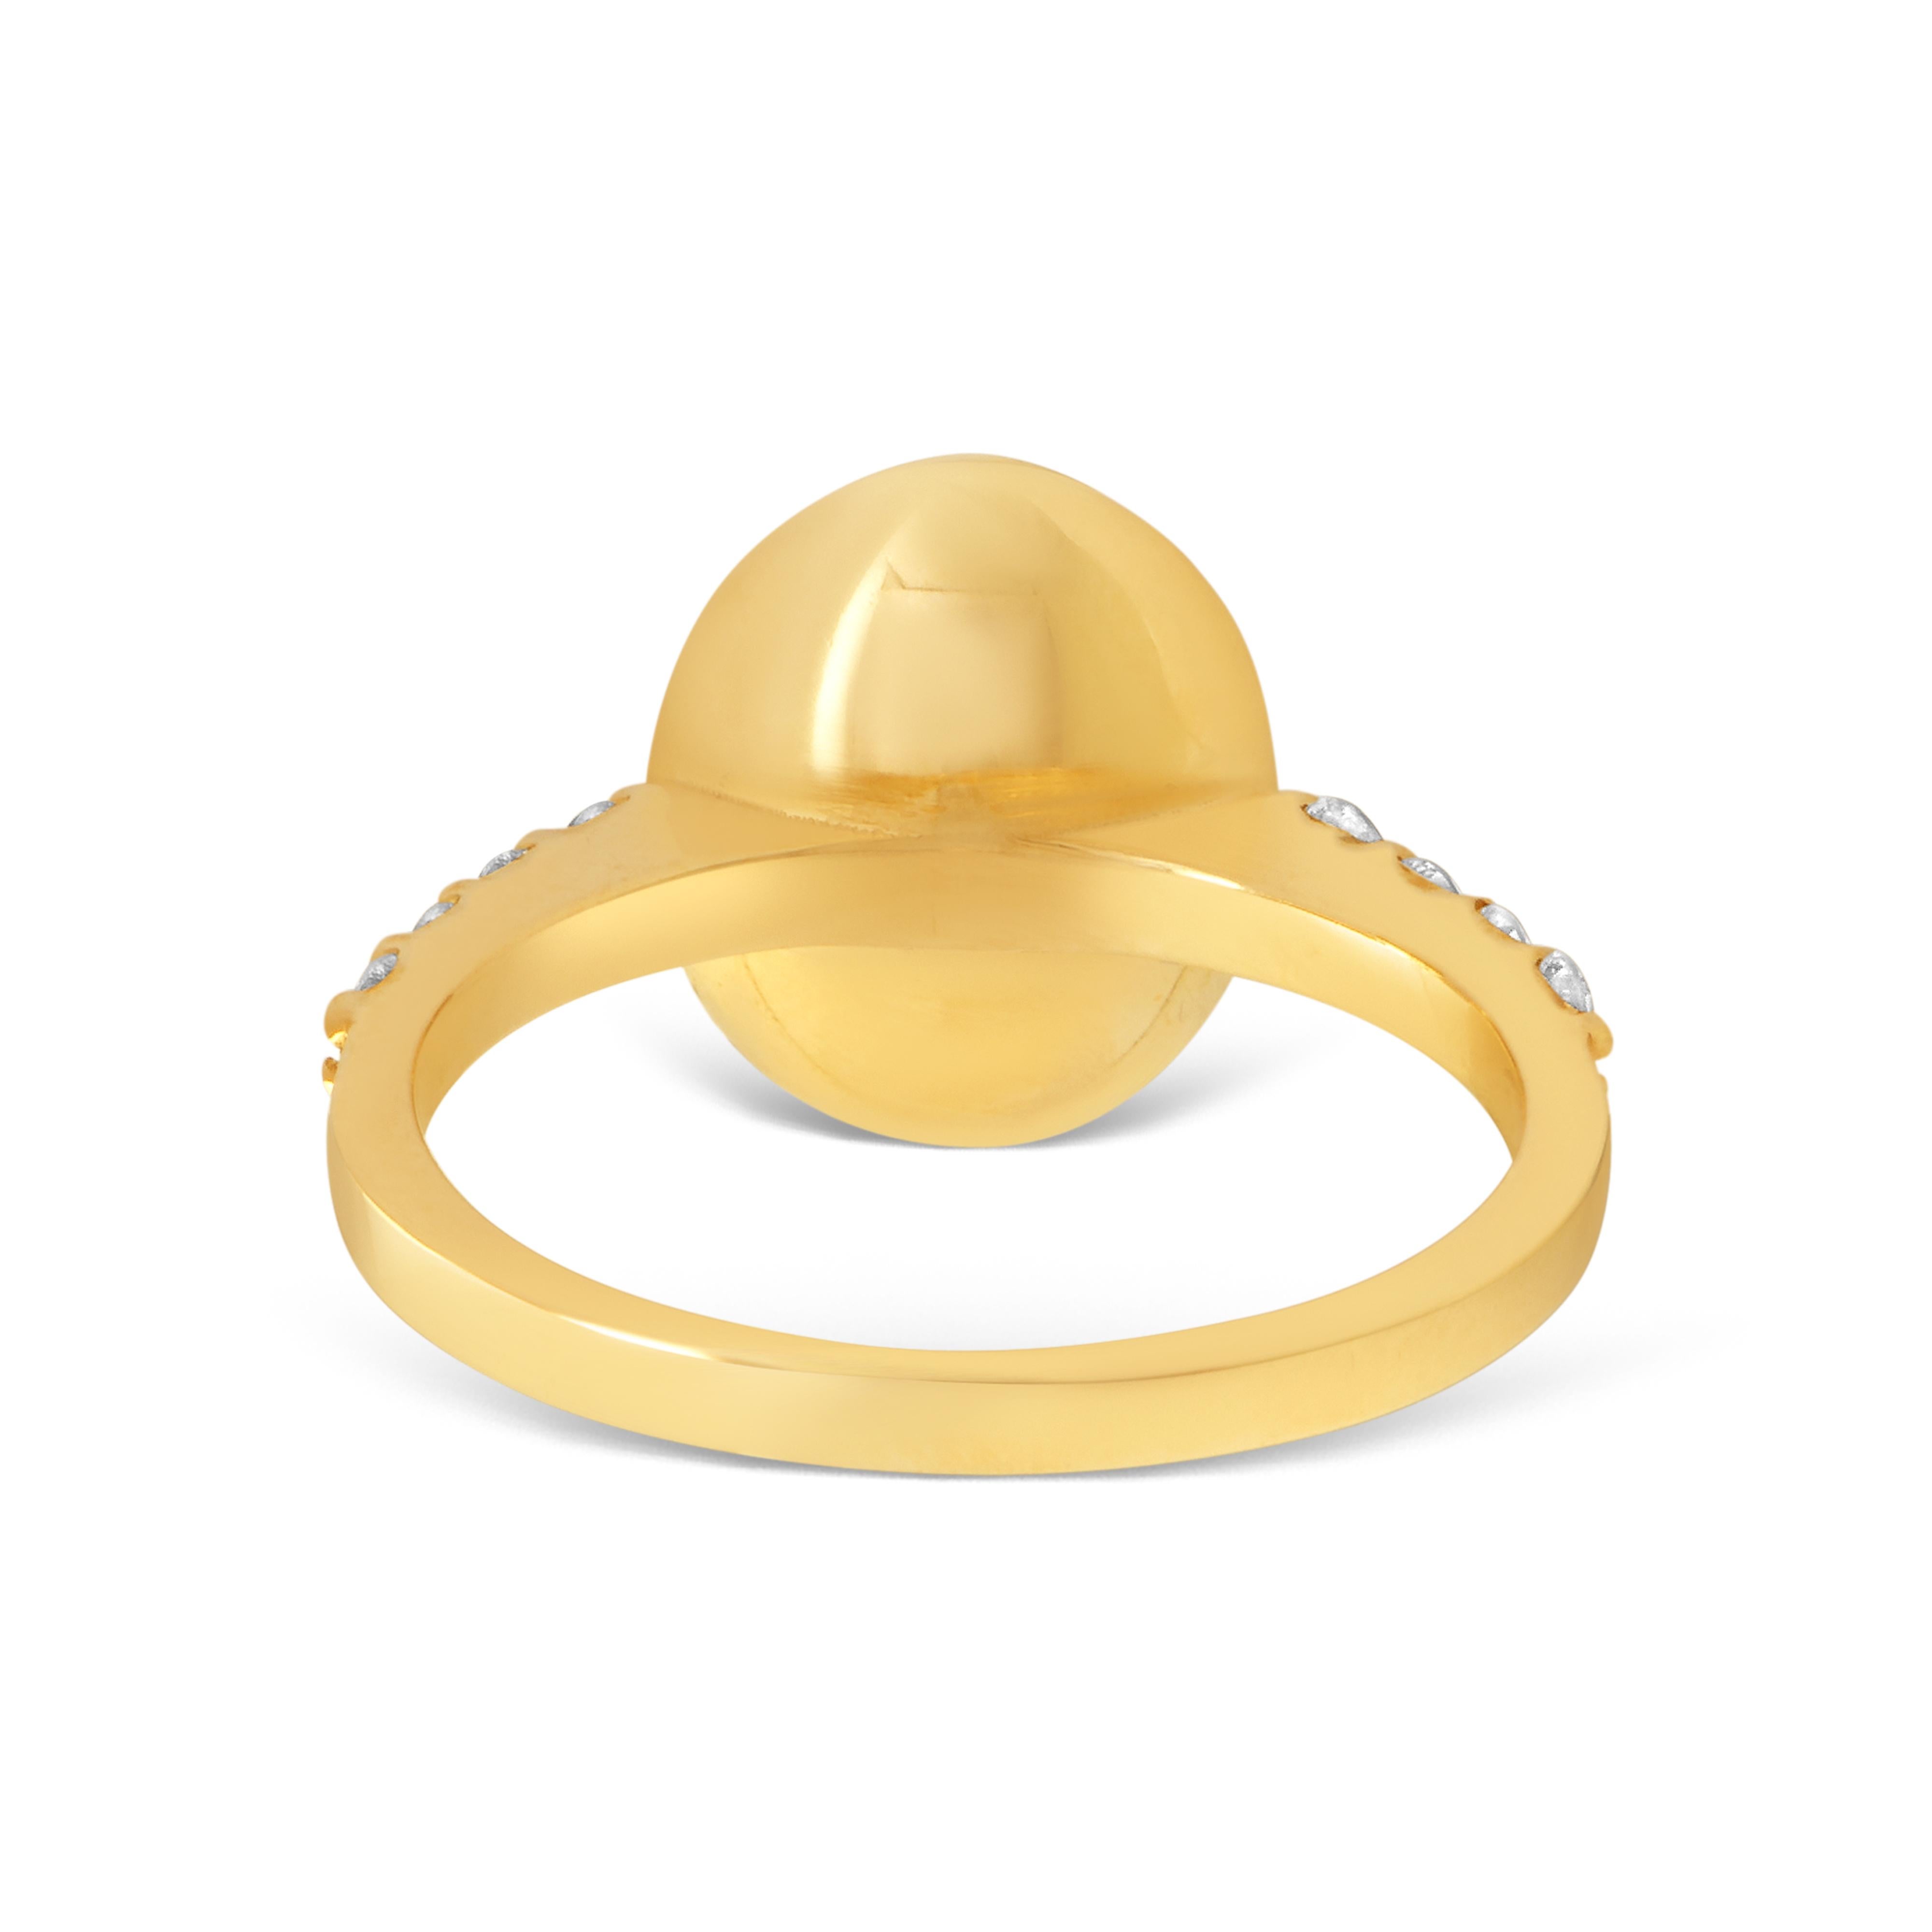 Modern Tourmaline Triplets - 14 Karat Gold 4.5 Carats Cabochon Tourmaline Ring  For Sale